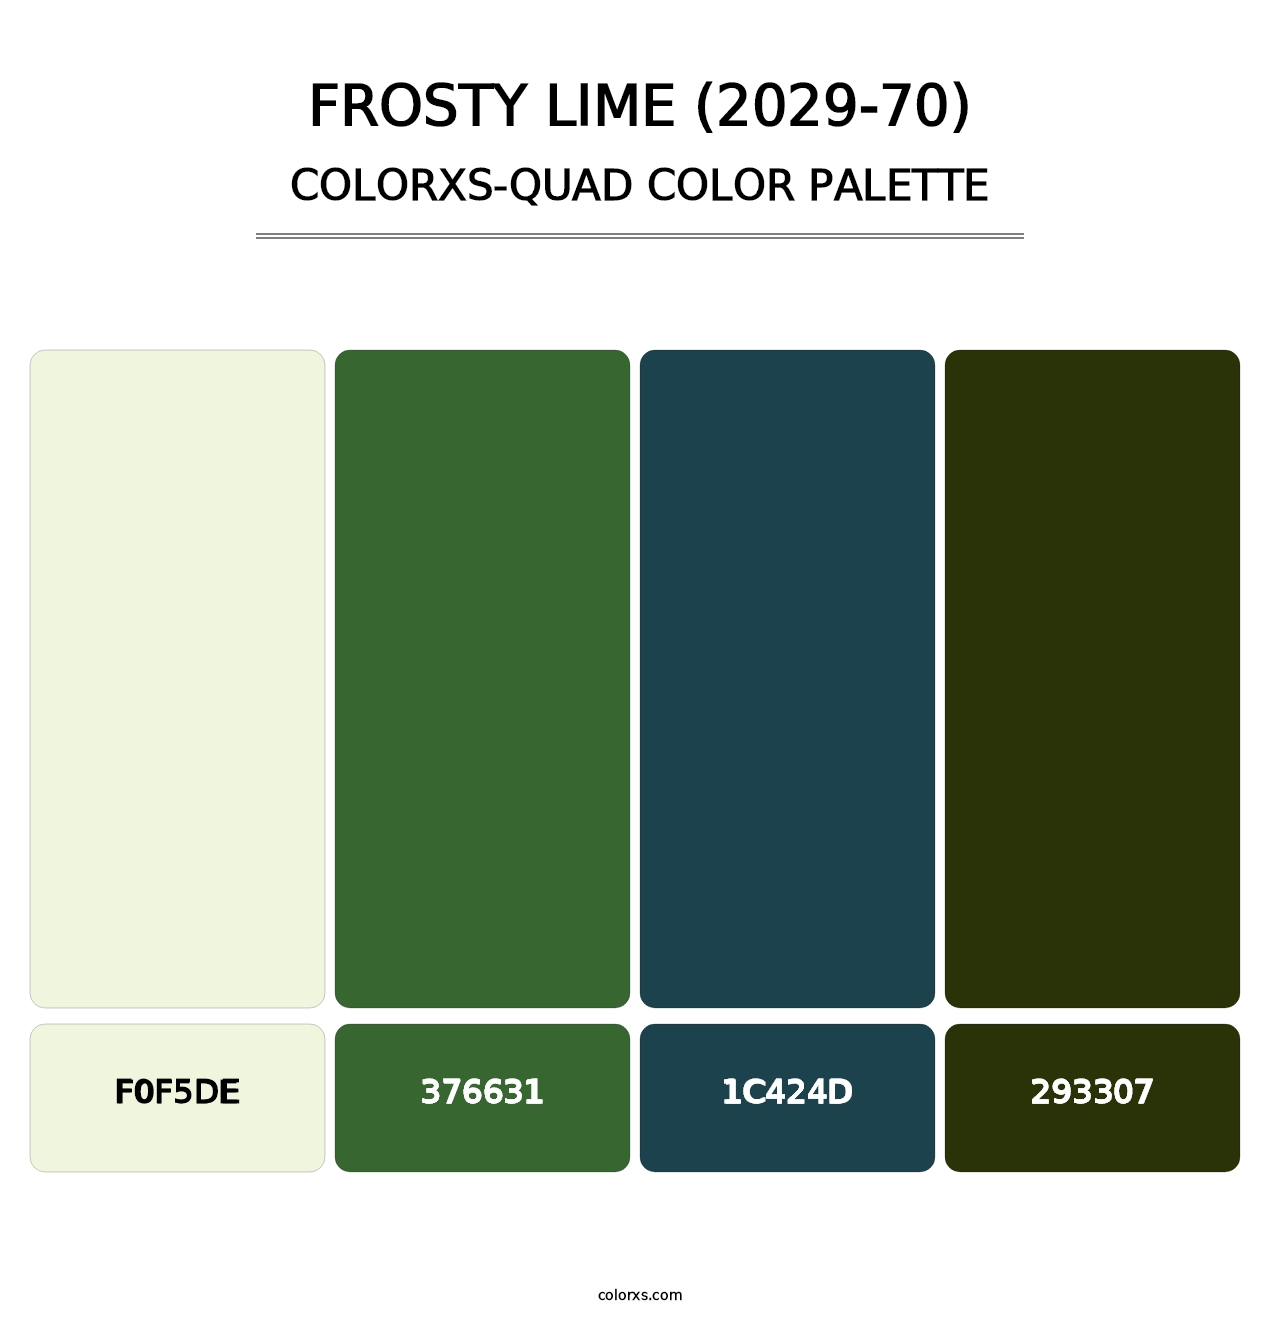 Frosty Lime (2029-70) - Colorxs Quad Palette